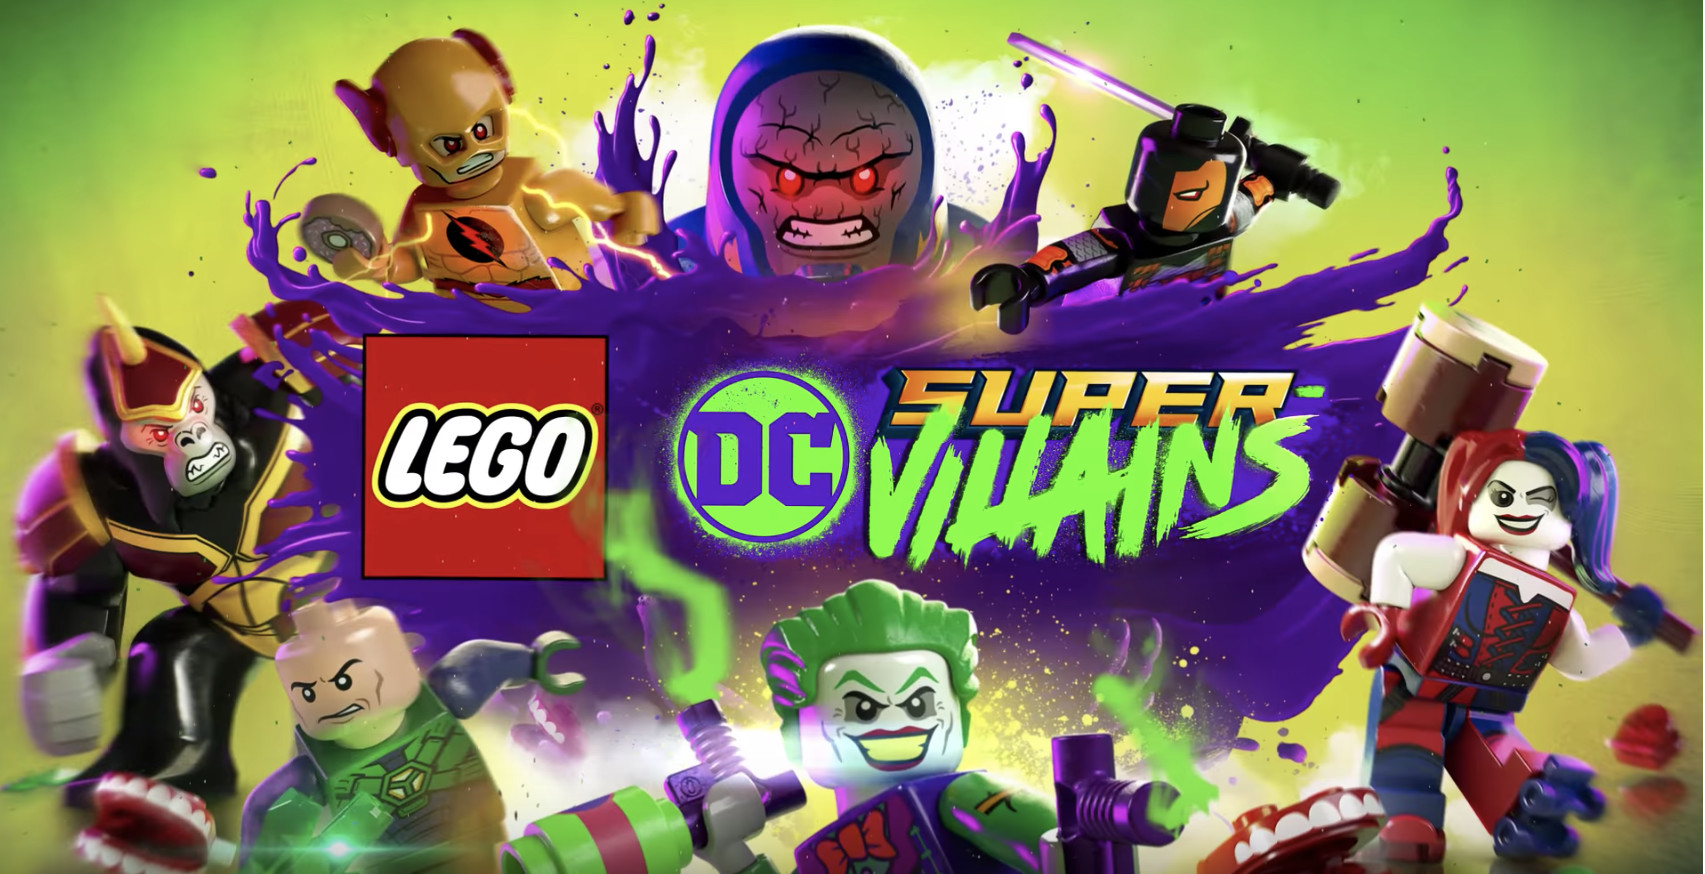 “Lego DC Super-Villains” Video Game Trailer Features The Joker, Harley Quinn & More